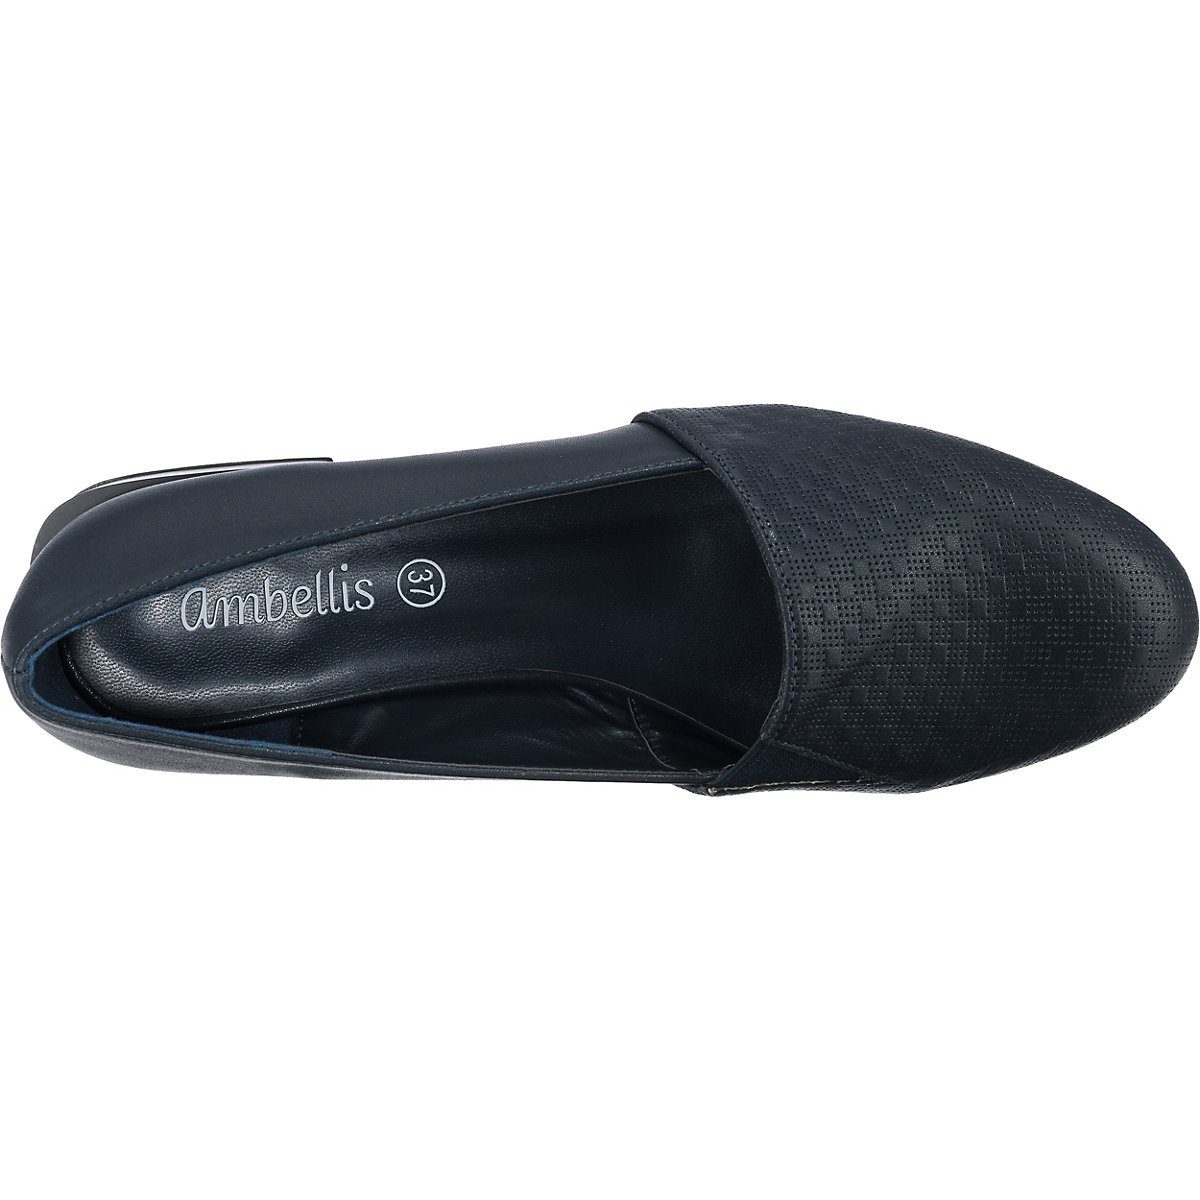 Schuhe Halbschuhe ambellis Classic Loafers Loafer